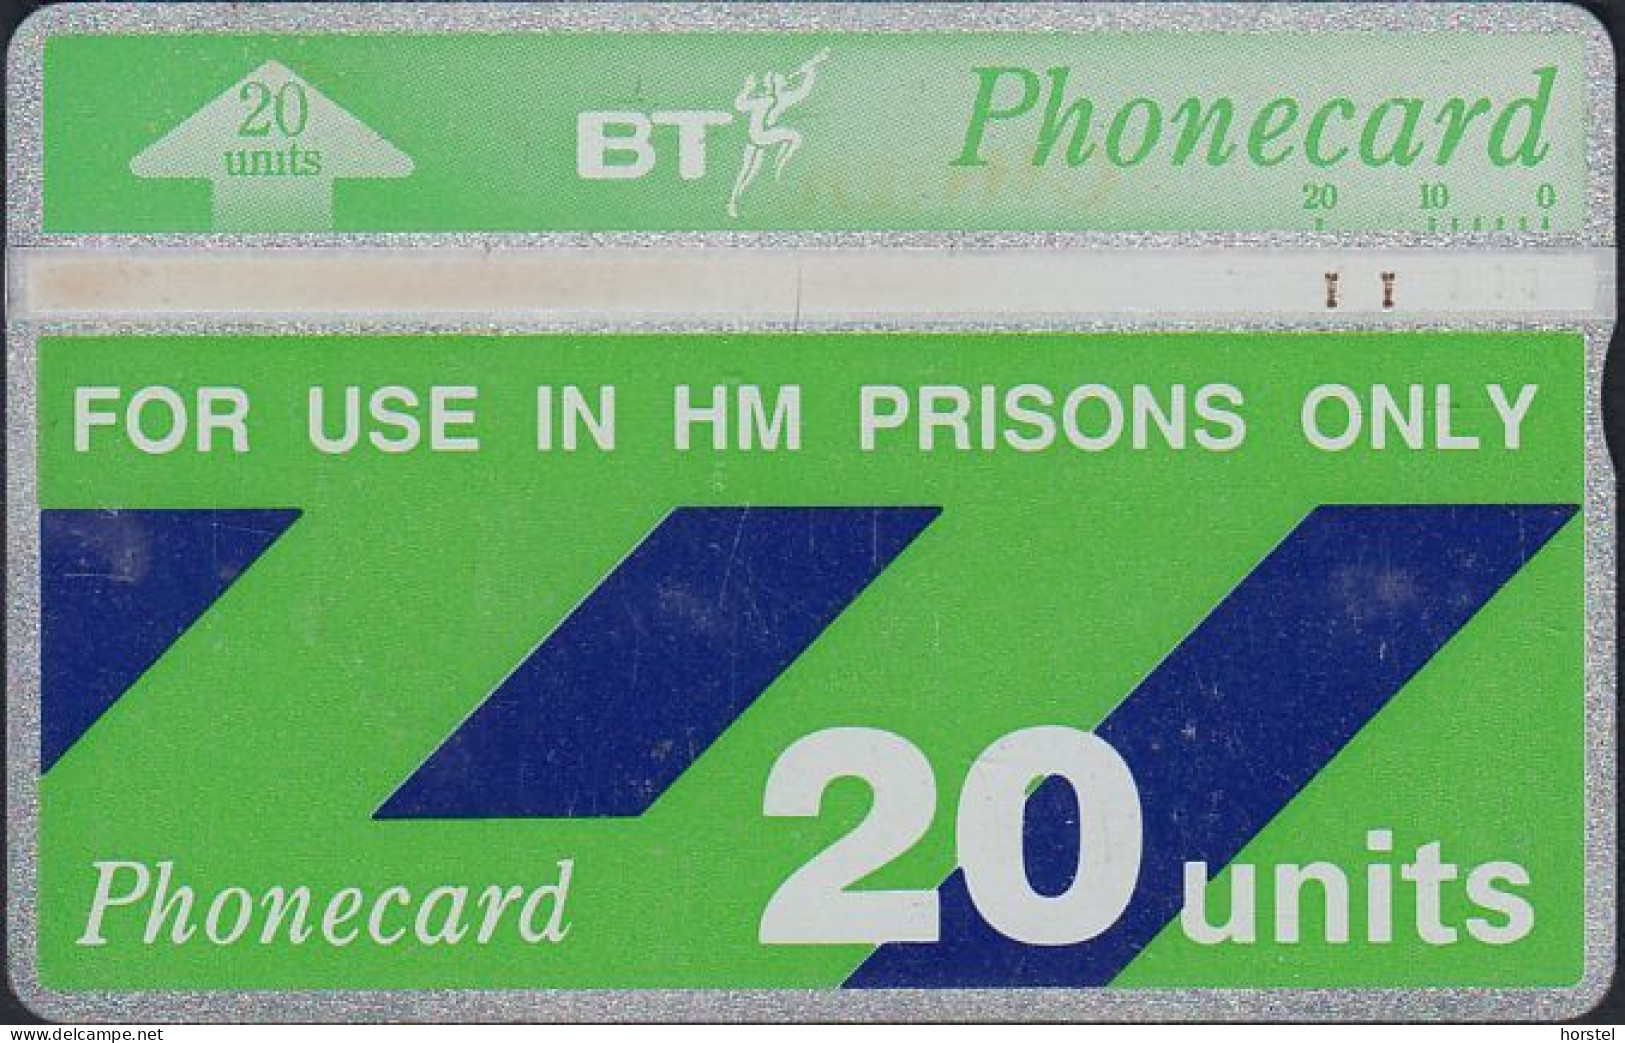 UK - British Telecom L&G H.M. Prison Card CUP005  (212E)  20 Units - [ 3] Prisiones